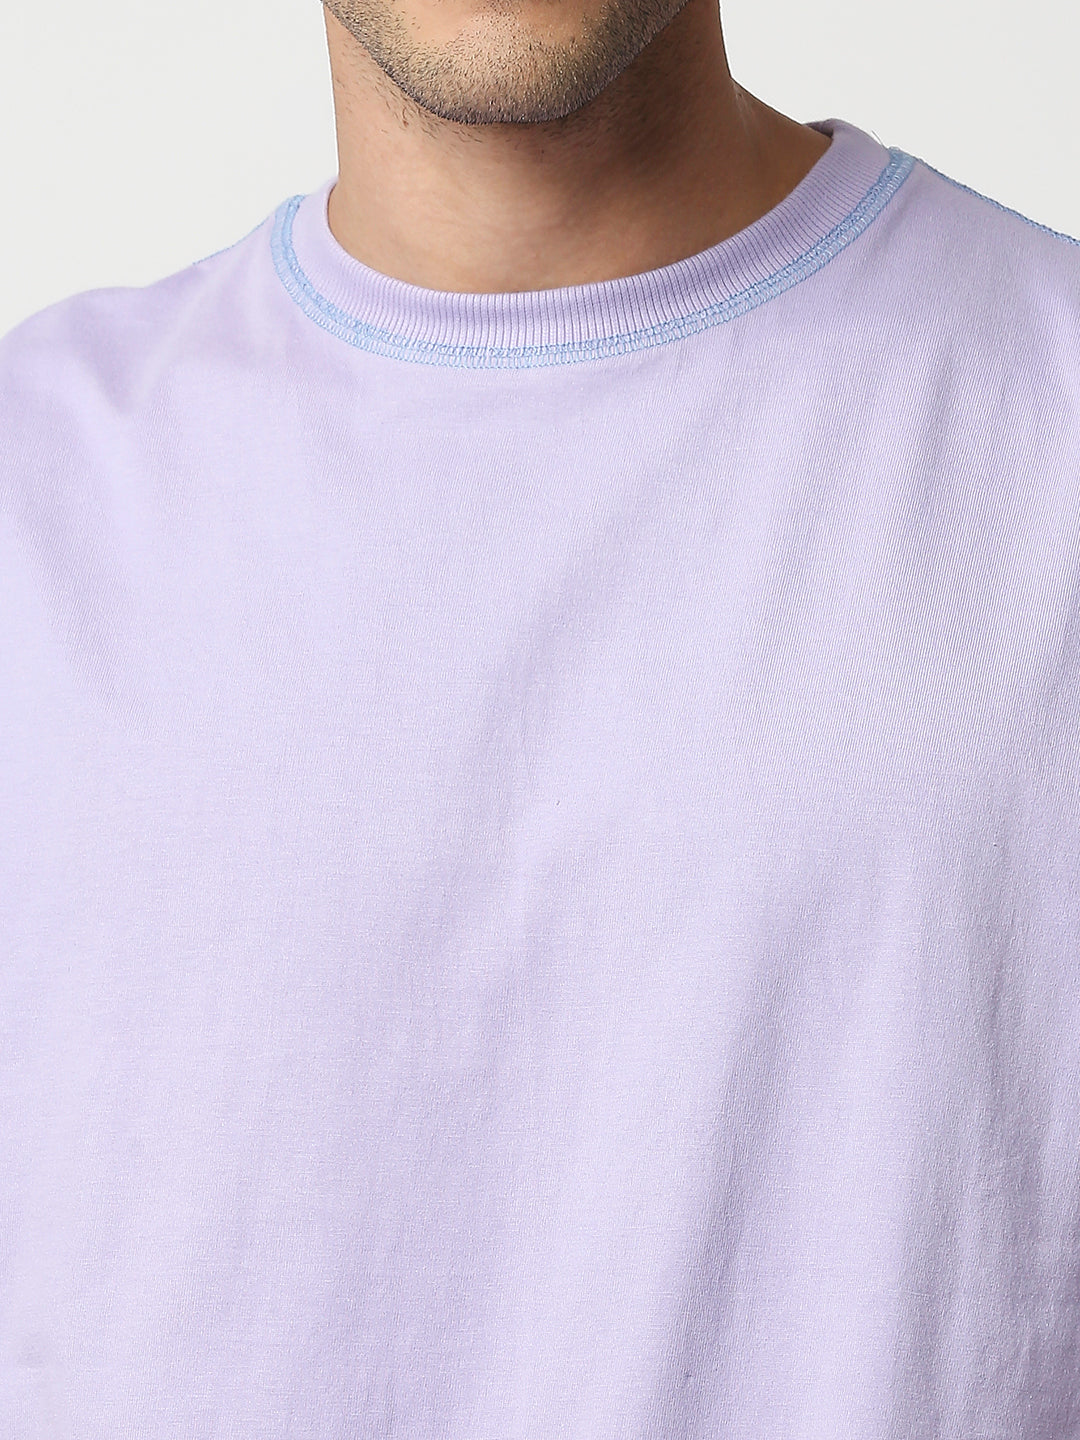 Buy Blamblack Men's Lavender Color Plain Oversized T Shirt